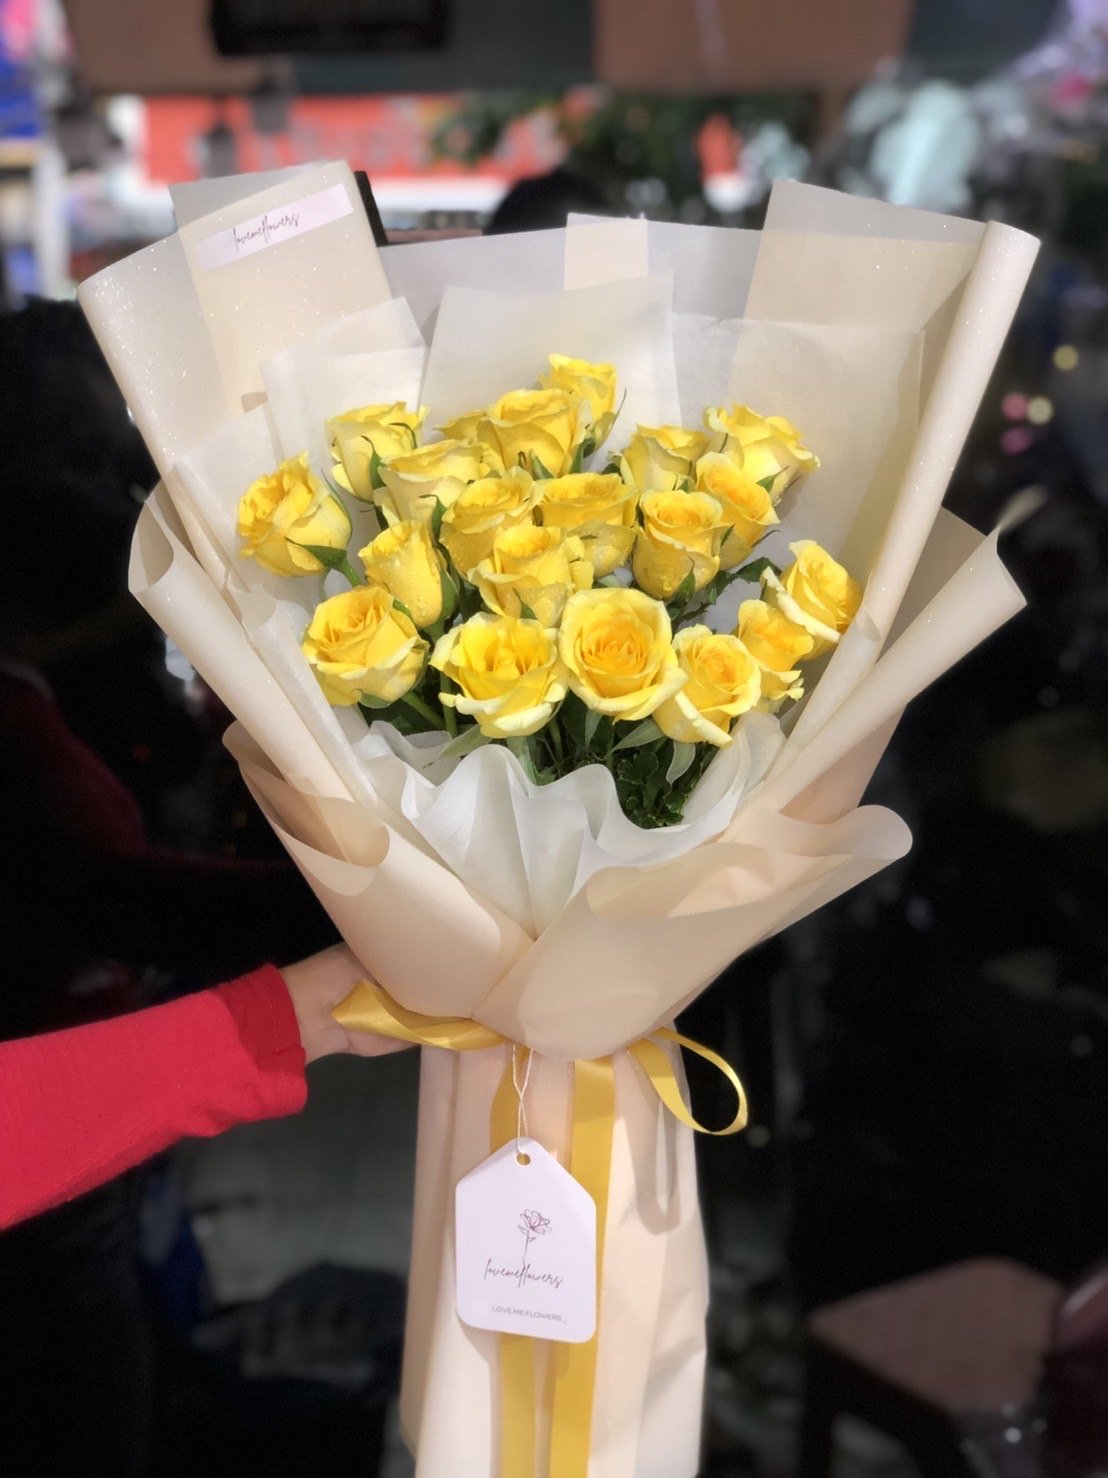 20 Yellow Roses